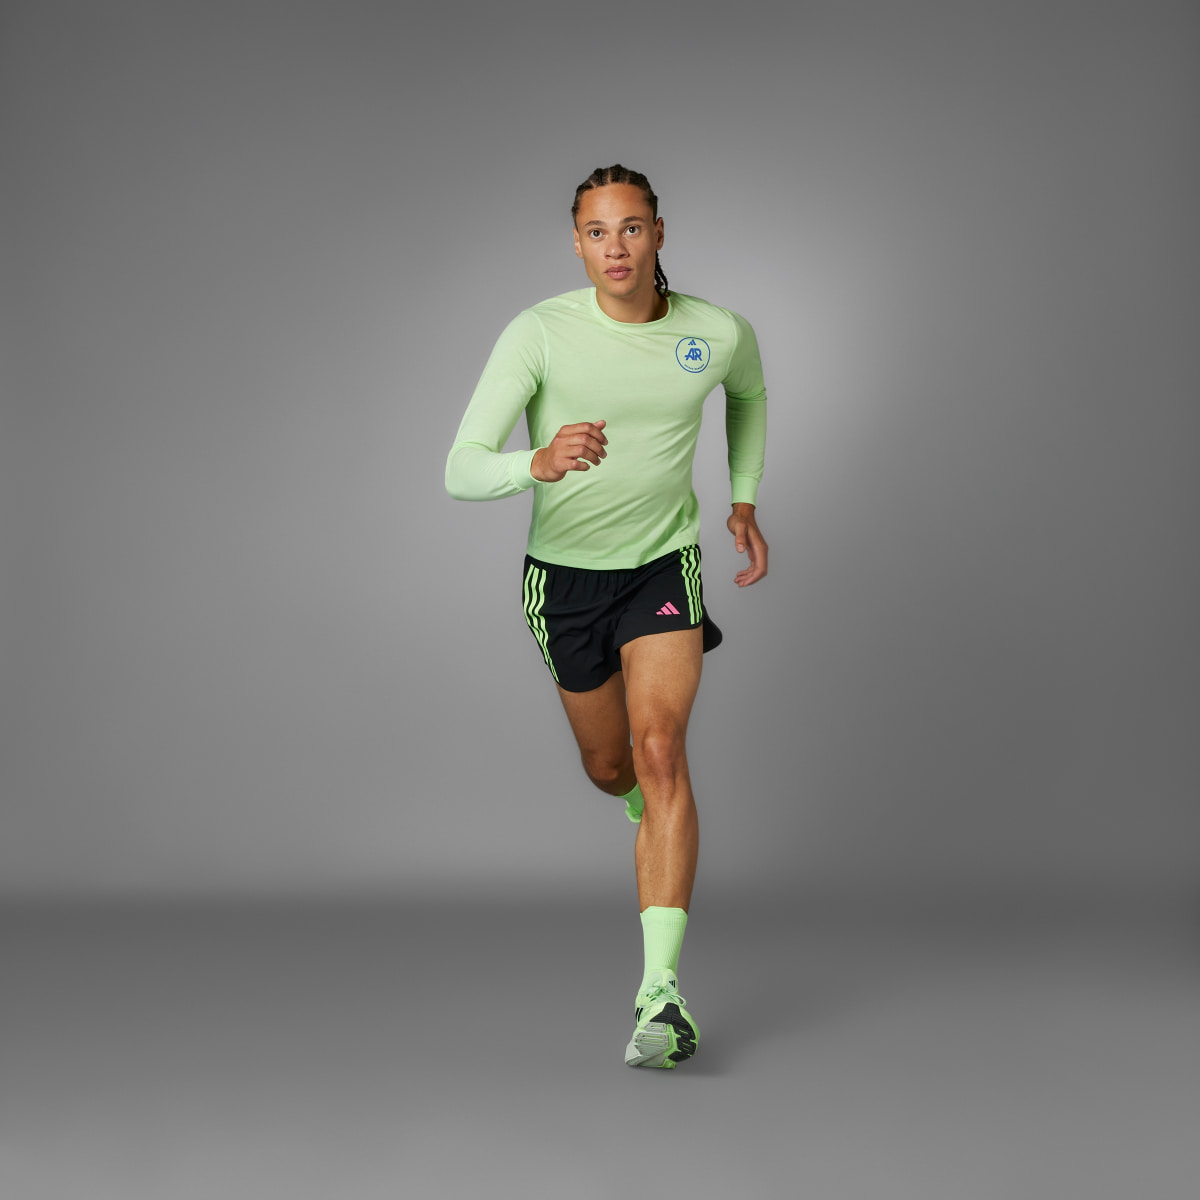 Adidas Own the Run adidas Runners Long Sleeve Long-Sleeve Top (Gender Neutral). 5